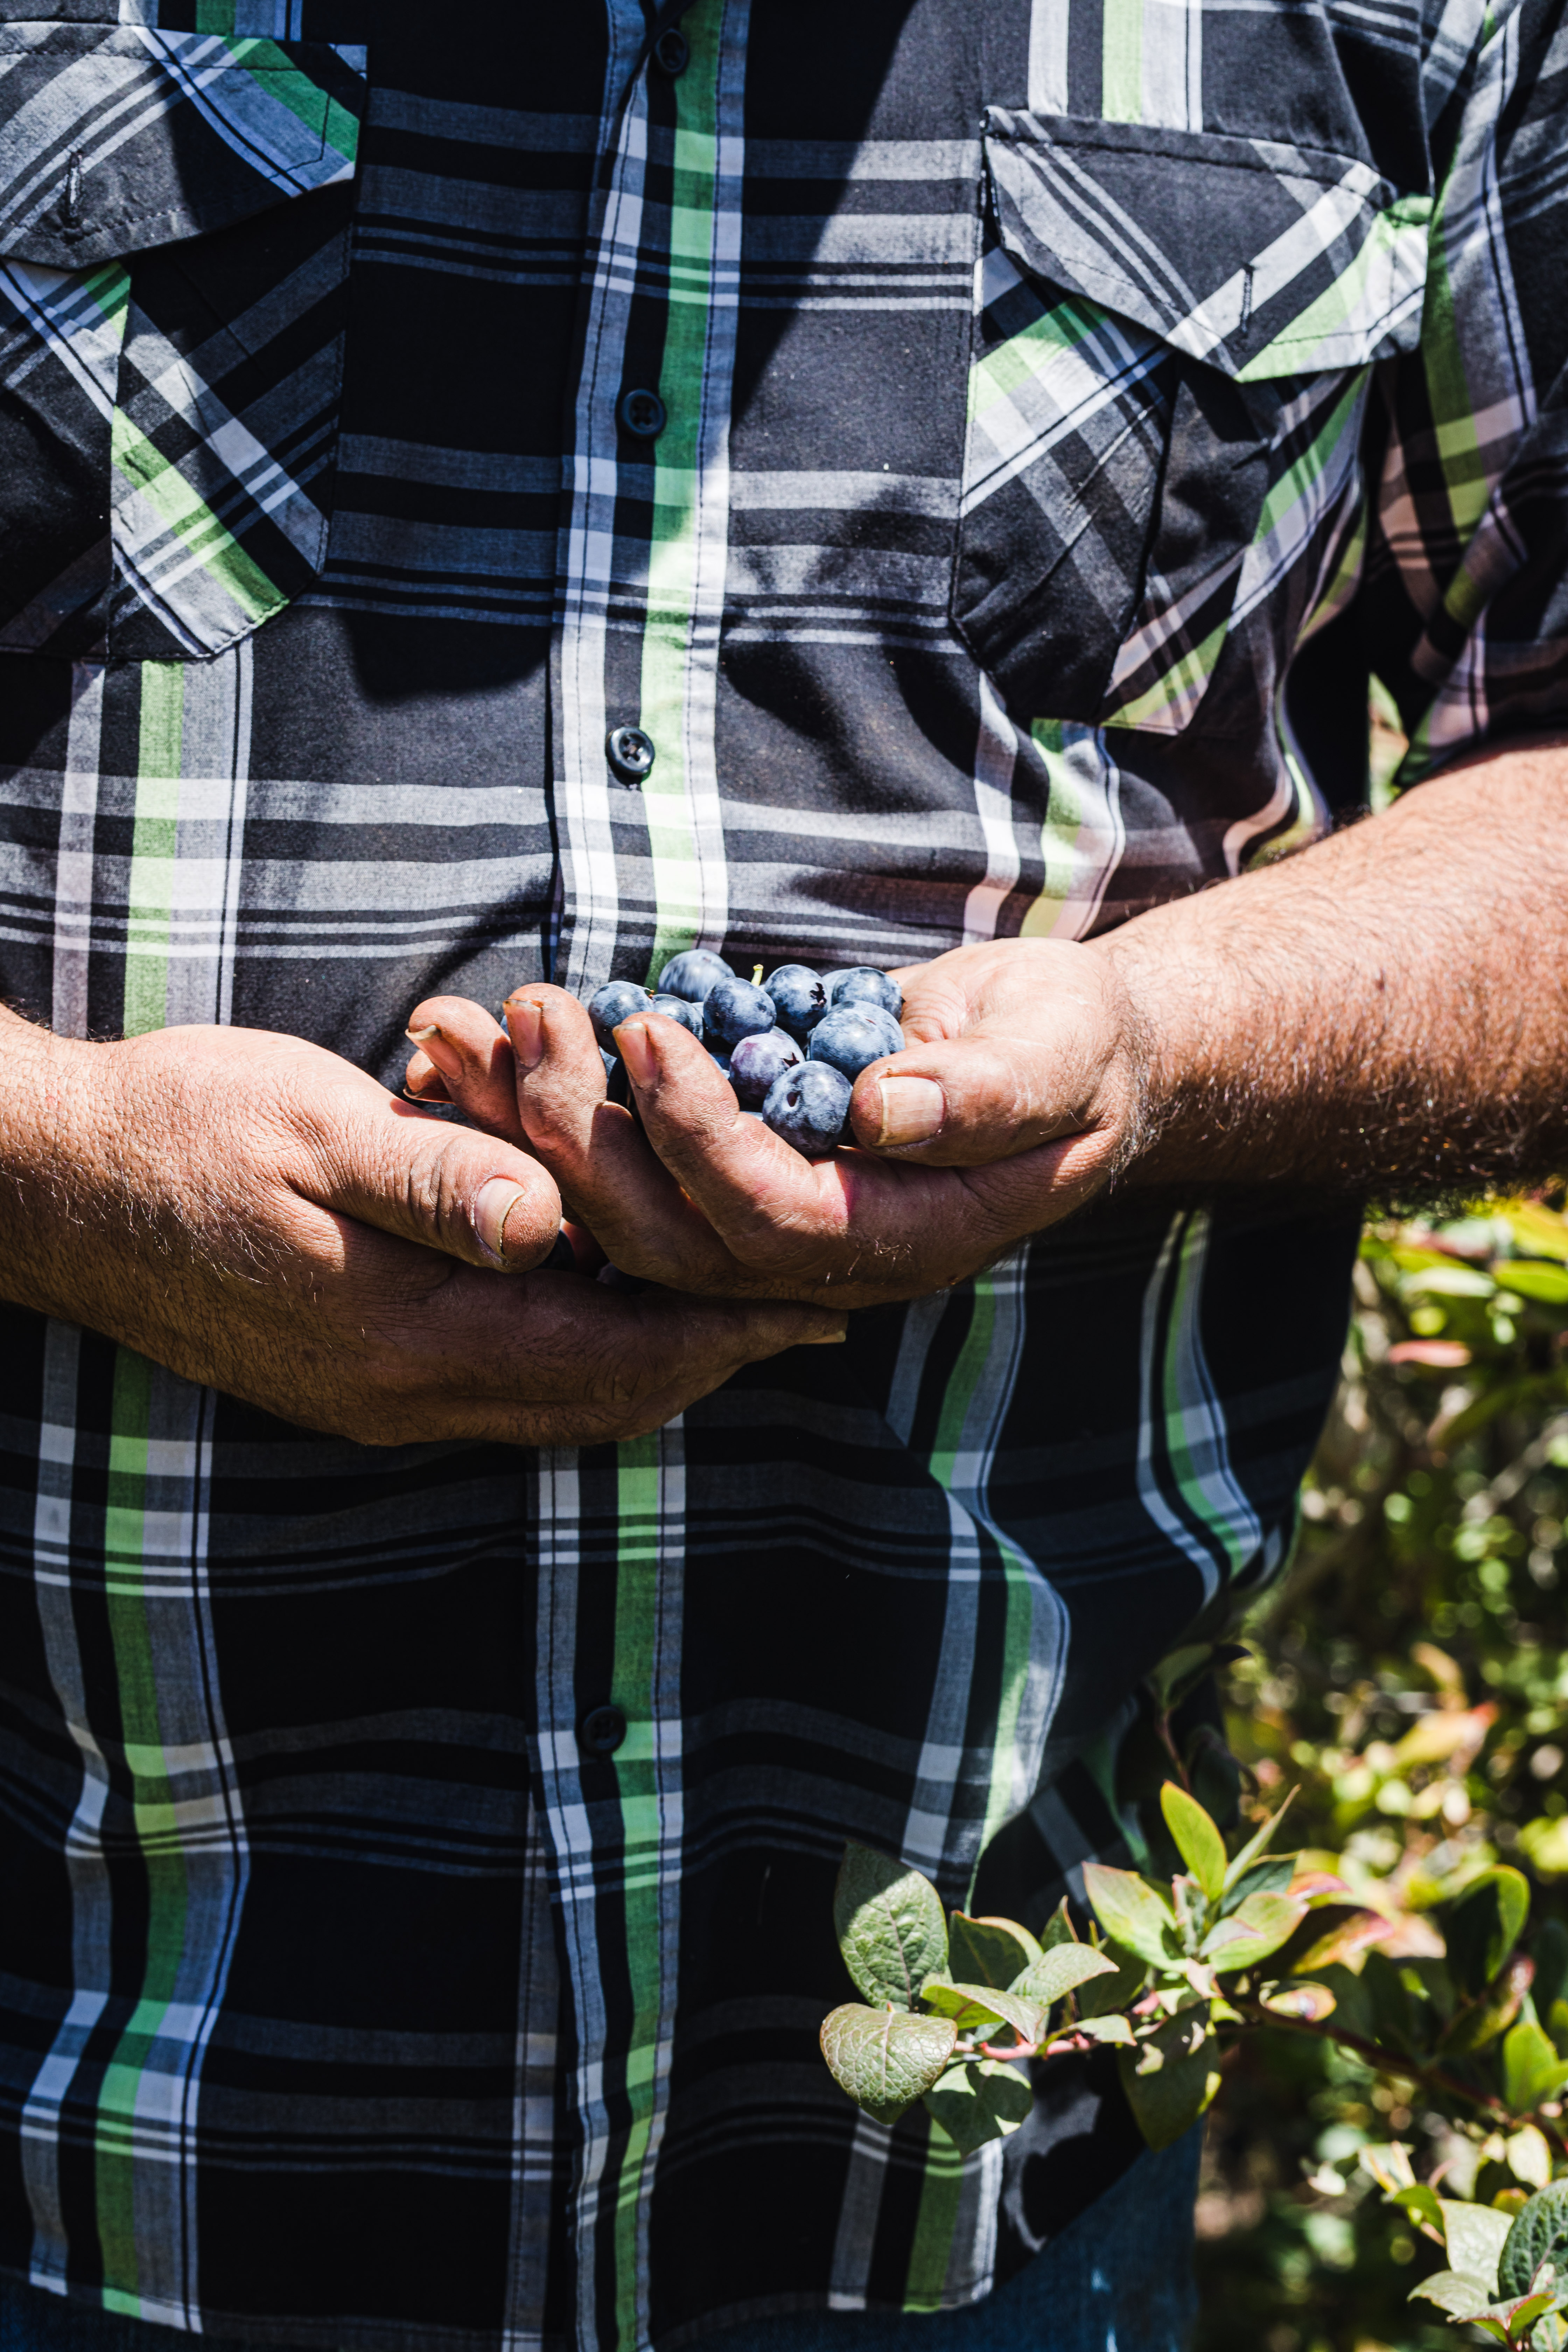 JSM Organics founder, Javier Zamora, showing off freshly harvest blueberries.